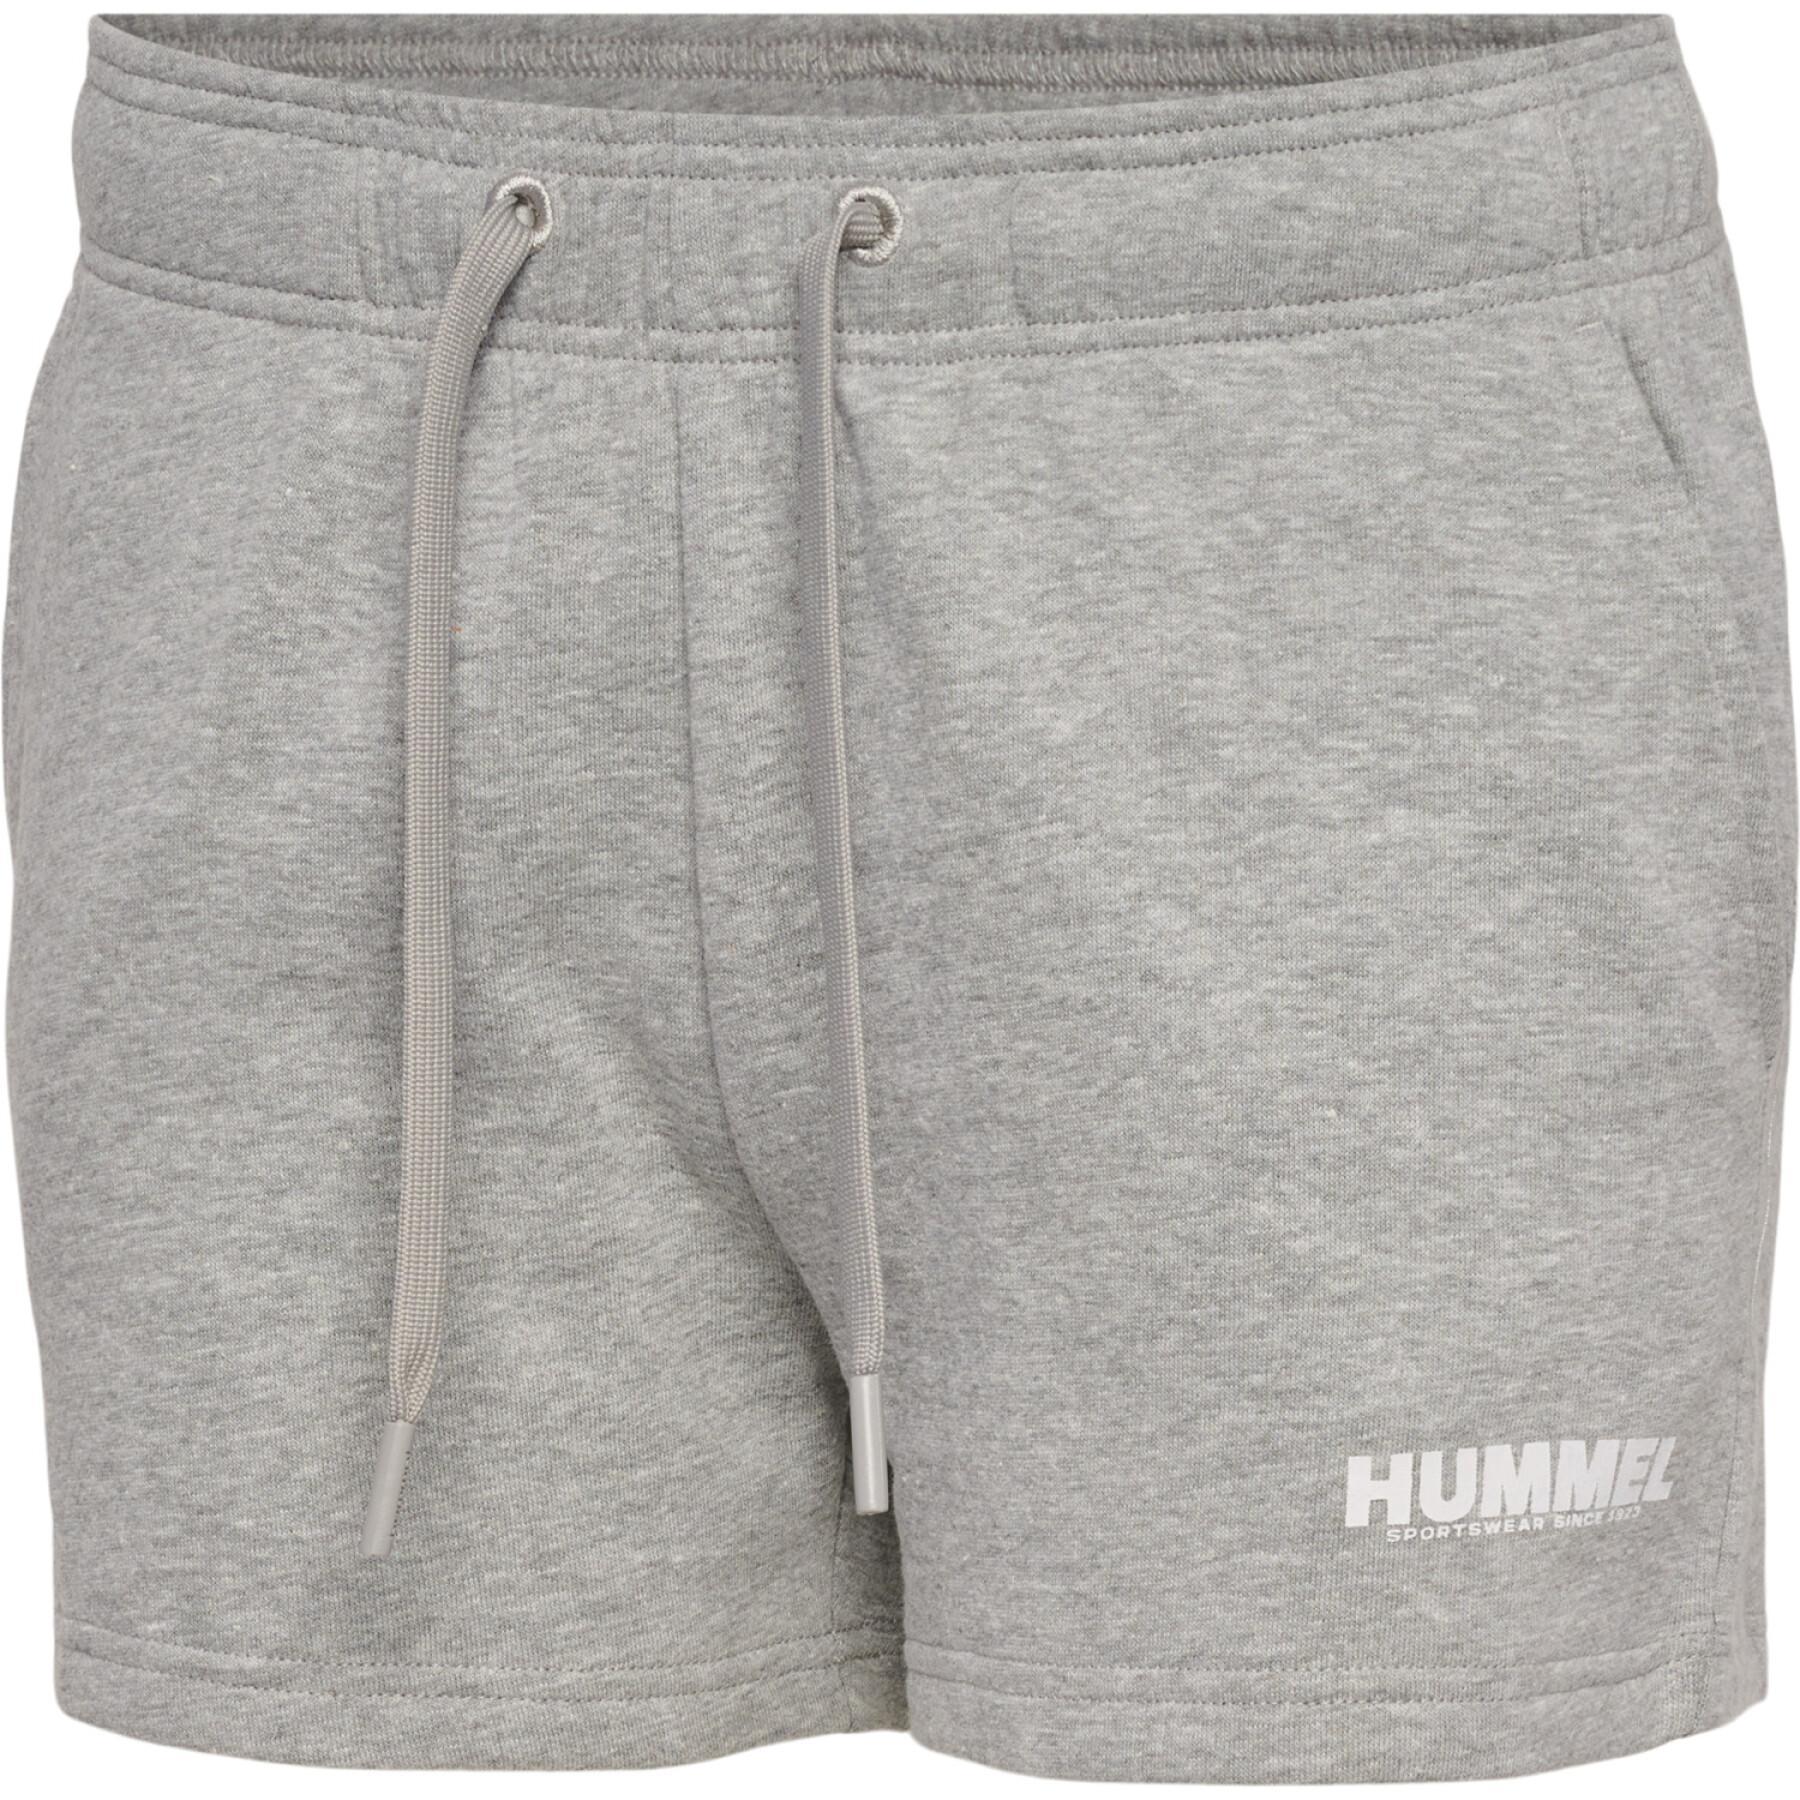 Hummel - cow print collared dress Bianco - Brands - Lifestyle - Women's sea  shorts Hummel Legacy